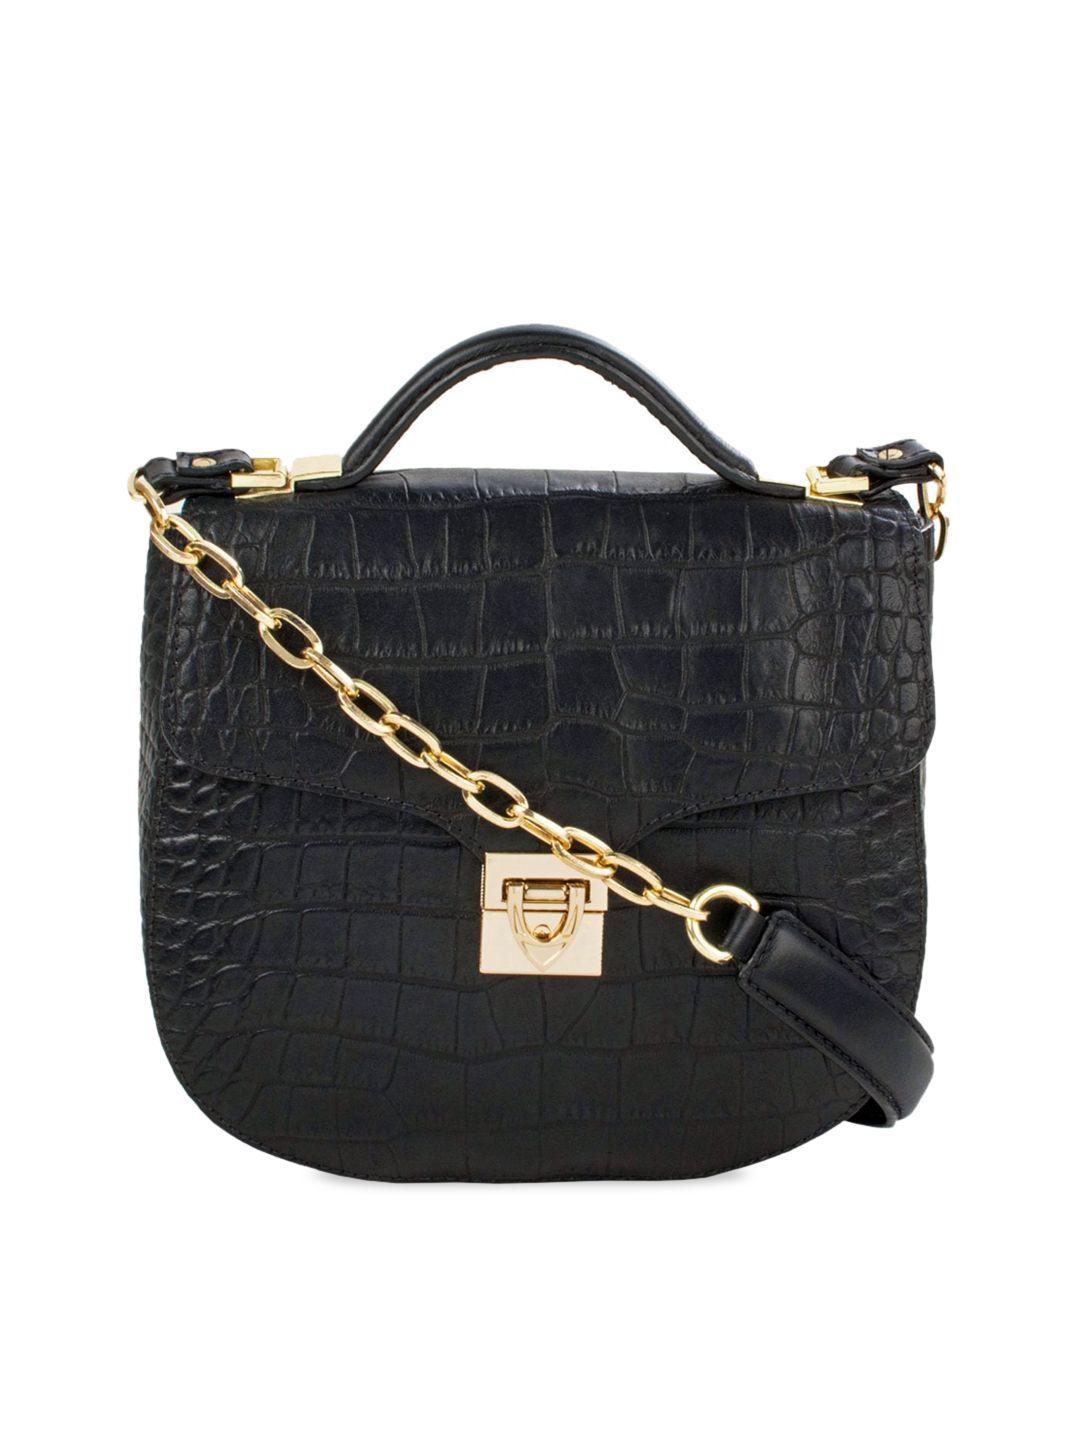 hidesign black croco-skin textured leather satchel bag